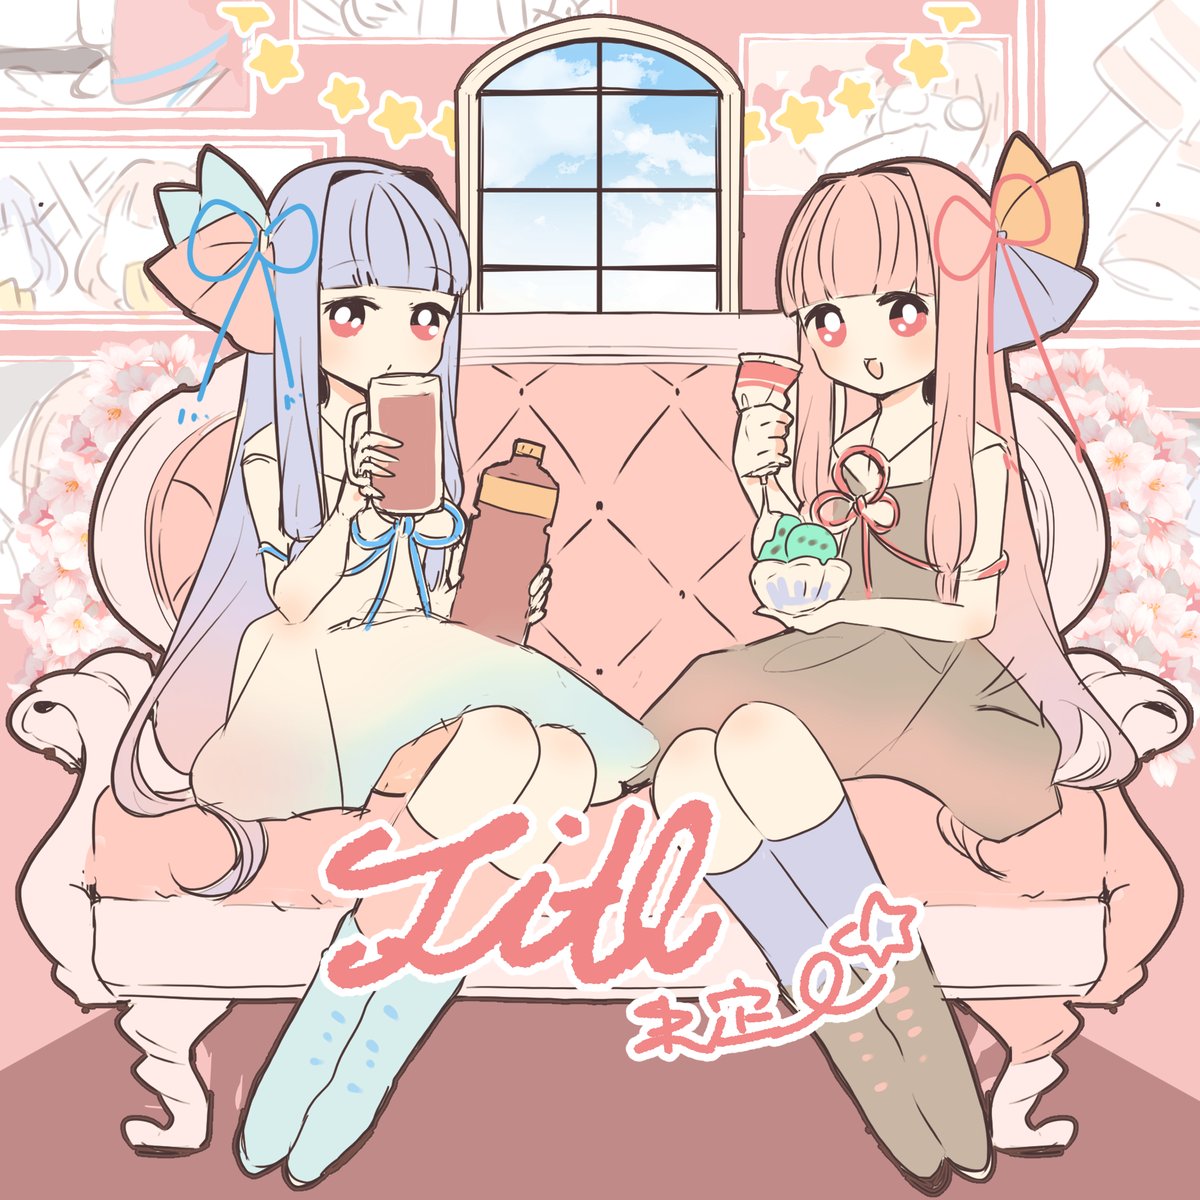 kotonoha akane ,kotonoha aoi multiple girls 2girls long hair pink hair holding sisters siblings  illustration images